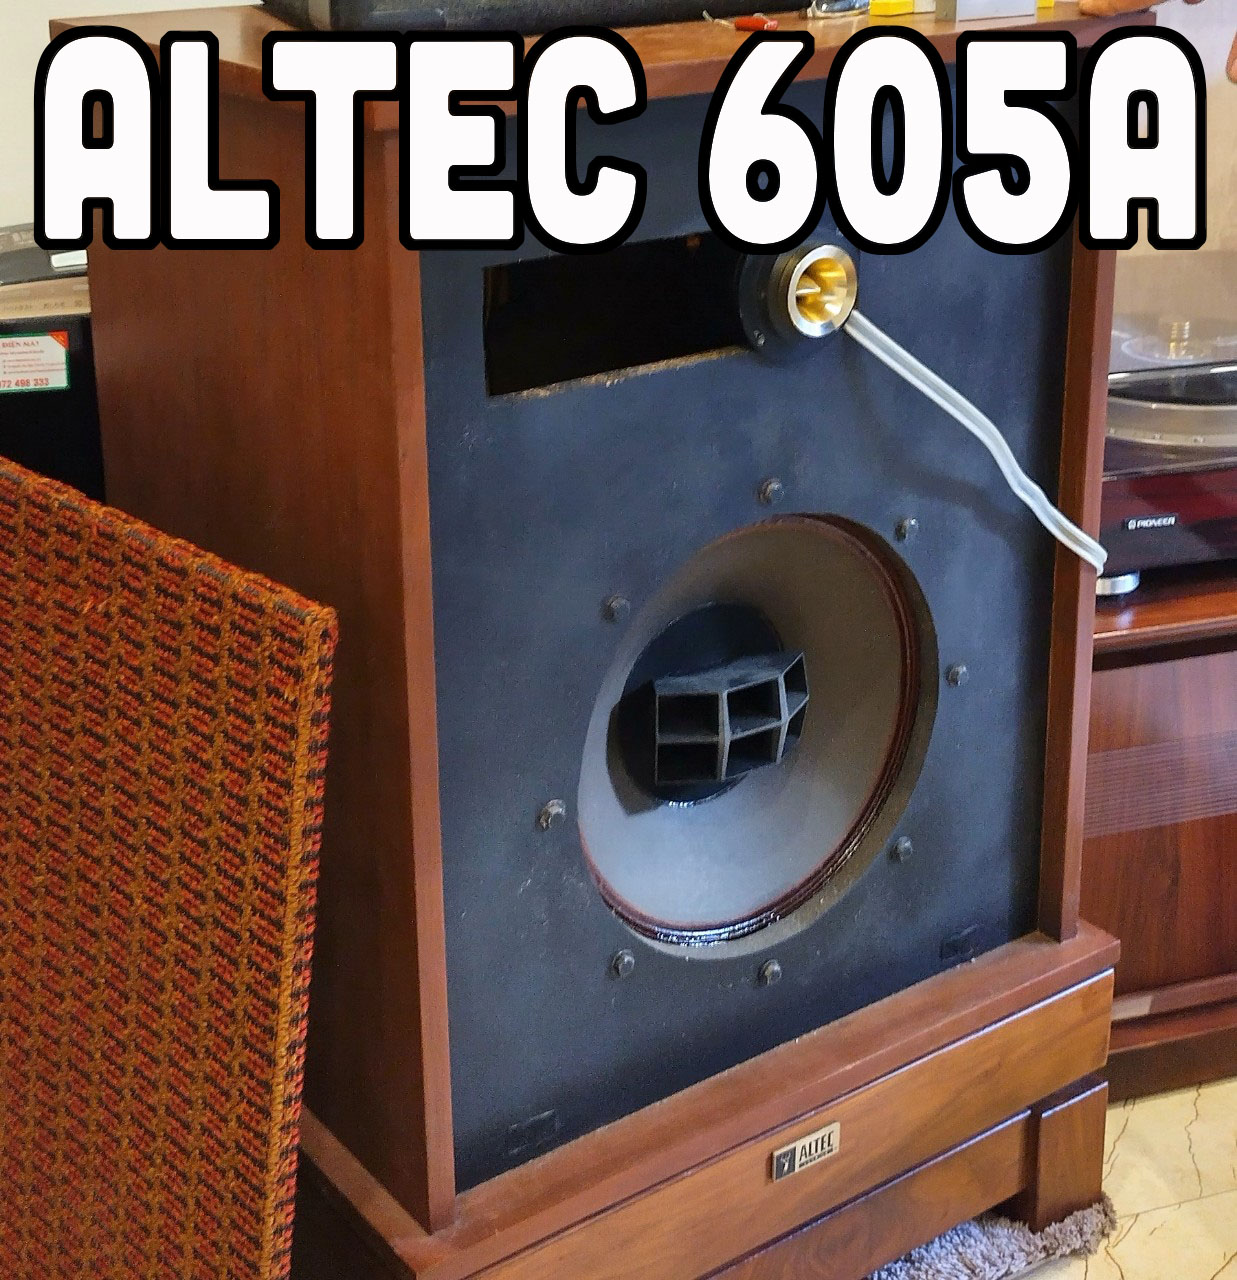 Kiểm tra và độ lại phân tần bộ loa Altec Duplex 605A kết hợp siêu treble Fostex T925